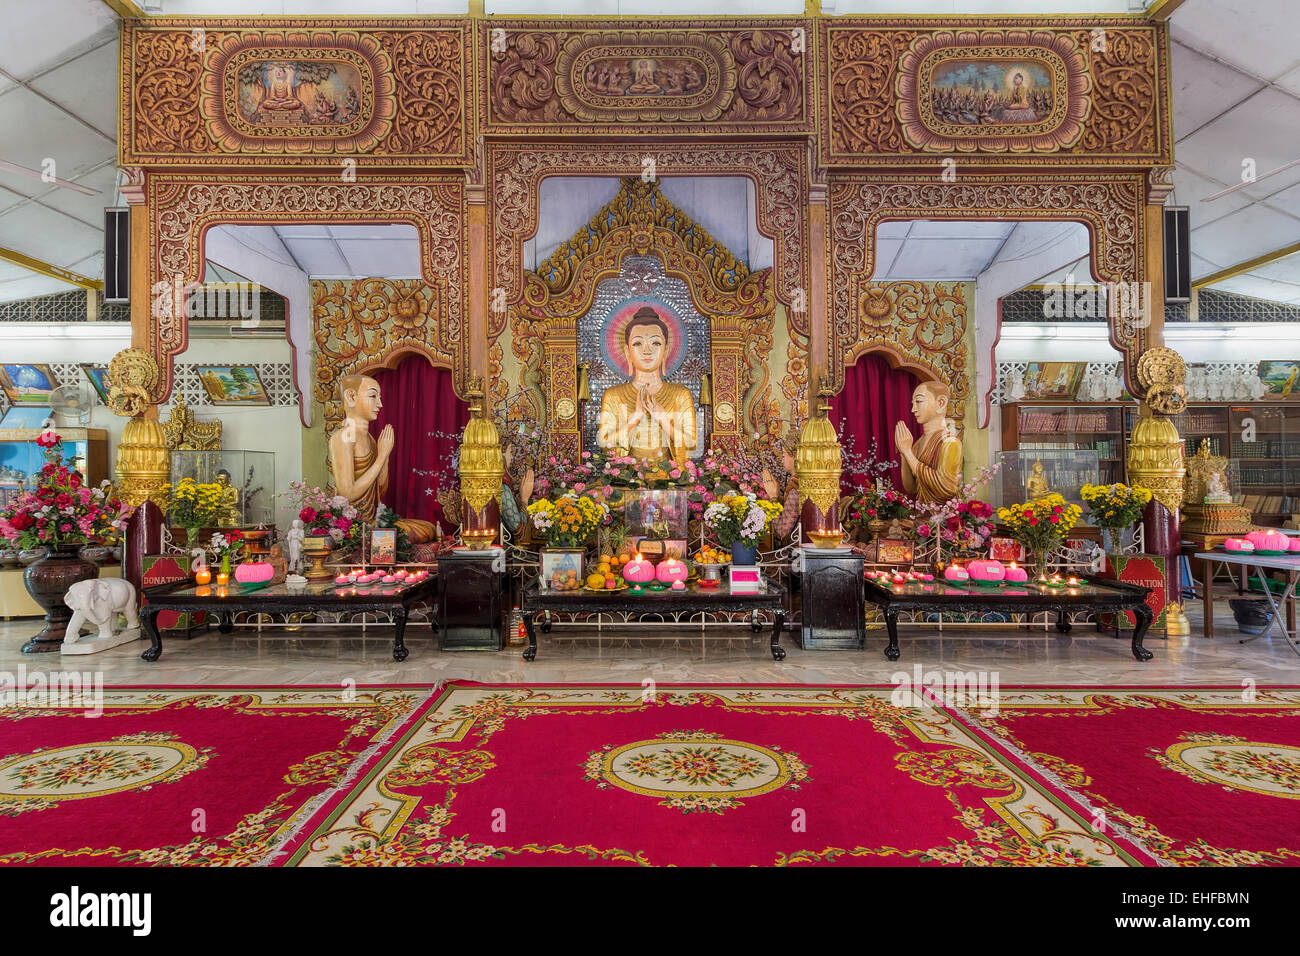 Dhammikarama Burmese Buddhist temple Cambodia Myanmar Buddha statue gold gilt monk pagoda hallway marble flooring reflection Stock Photo